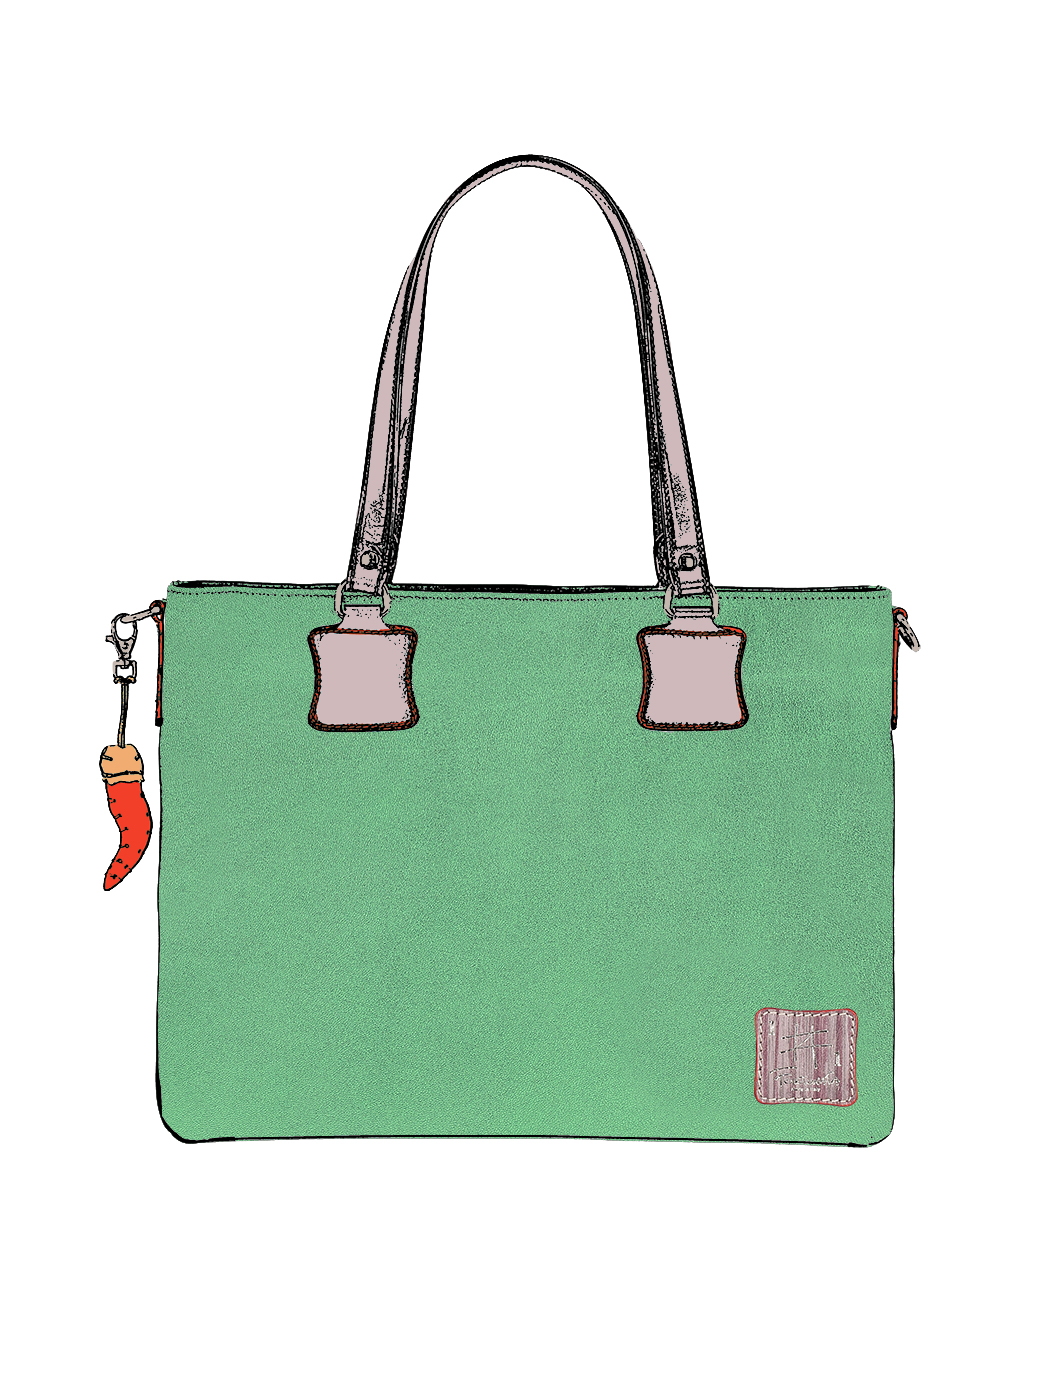 Shoulder Tote Convertible Bag Green - Handmade in Italy